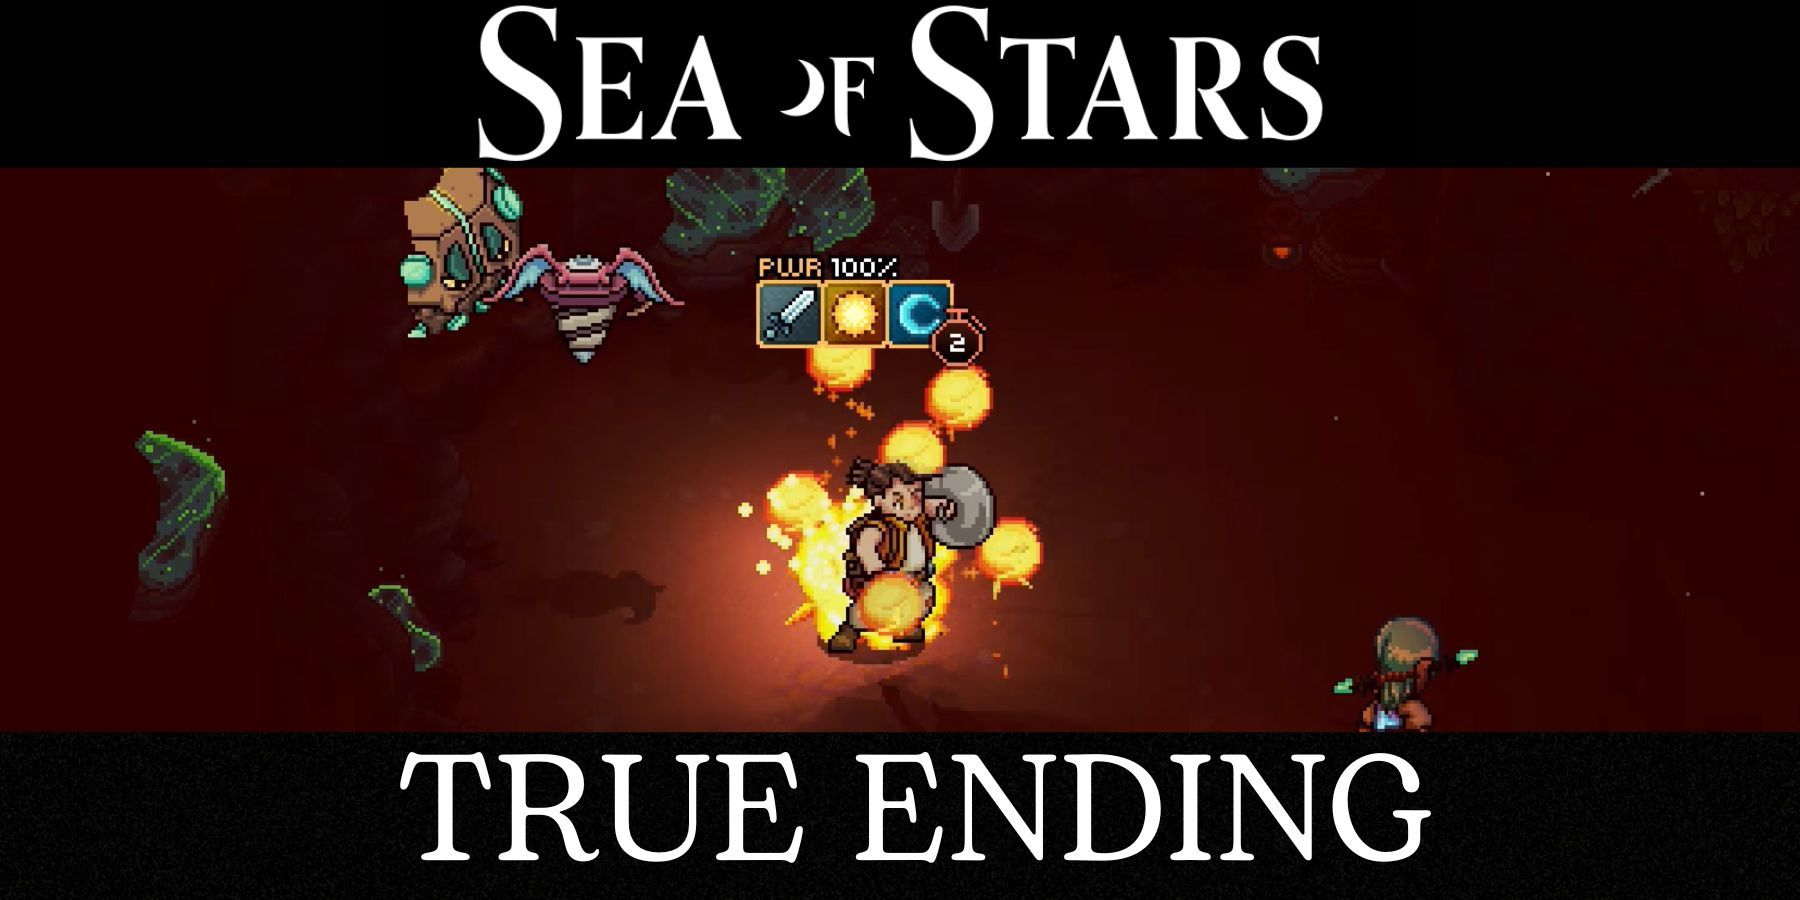 Sea of Stars True Ending Guide - Secret Final Boss and Ultimate